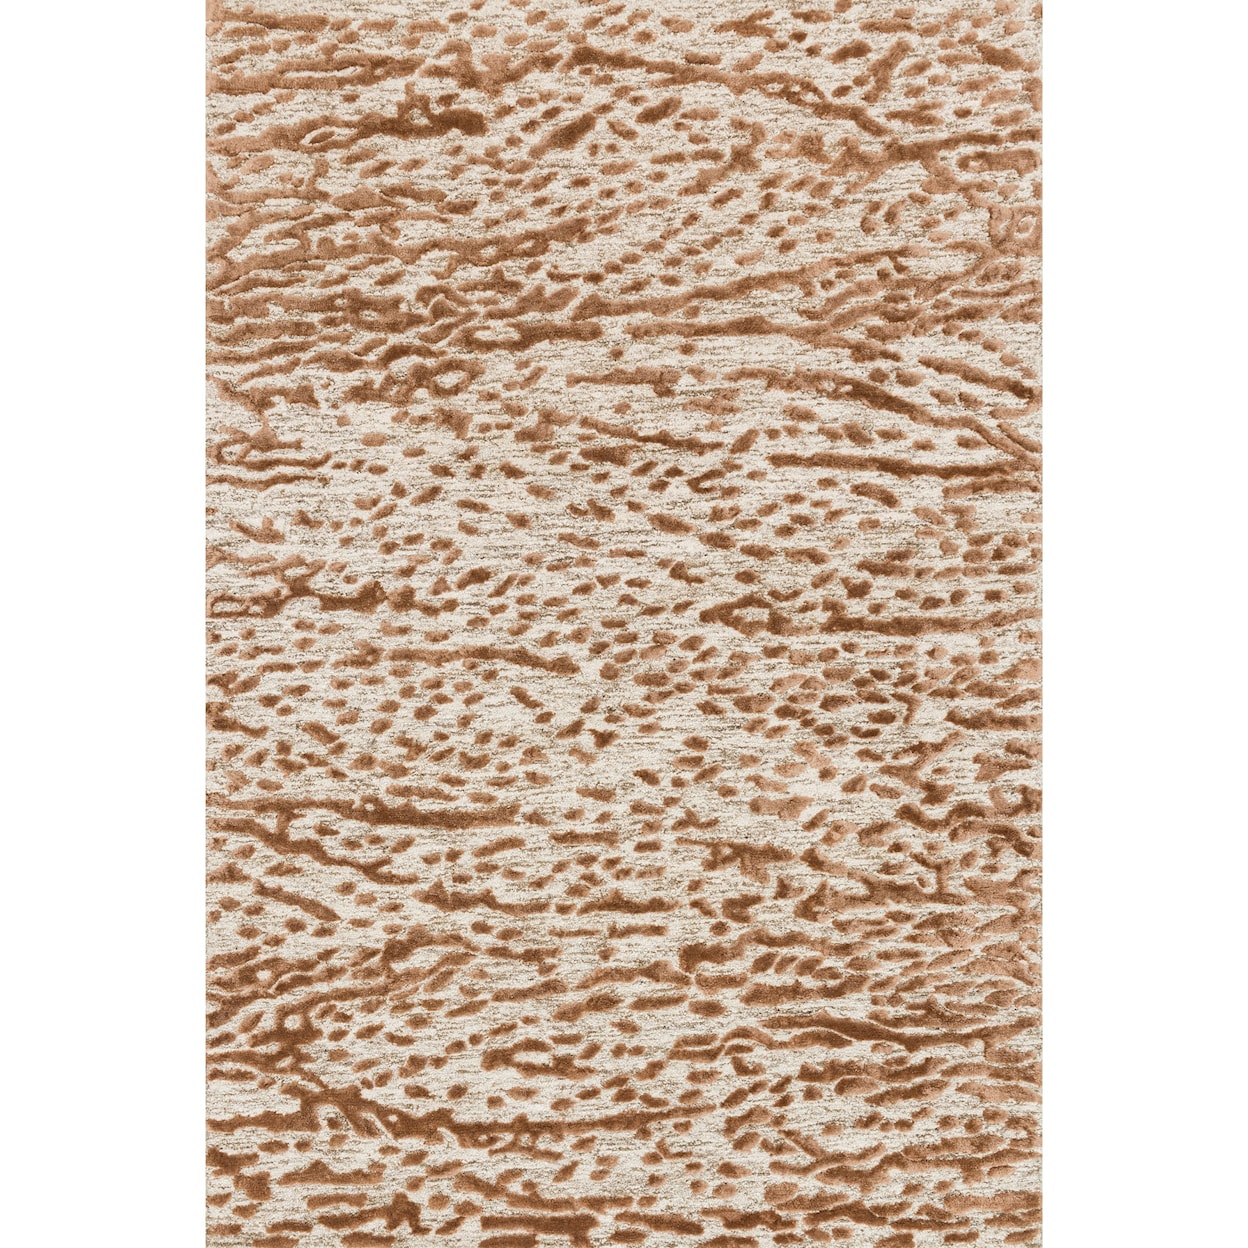 Reeds Rugs Juneau 9'3" x 13' Oatmeal / Terracotta Rug